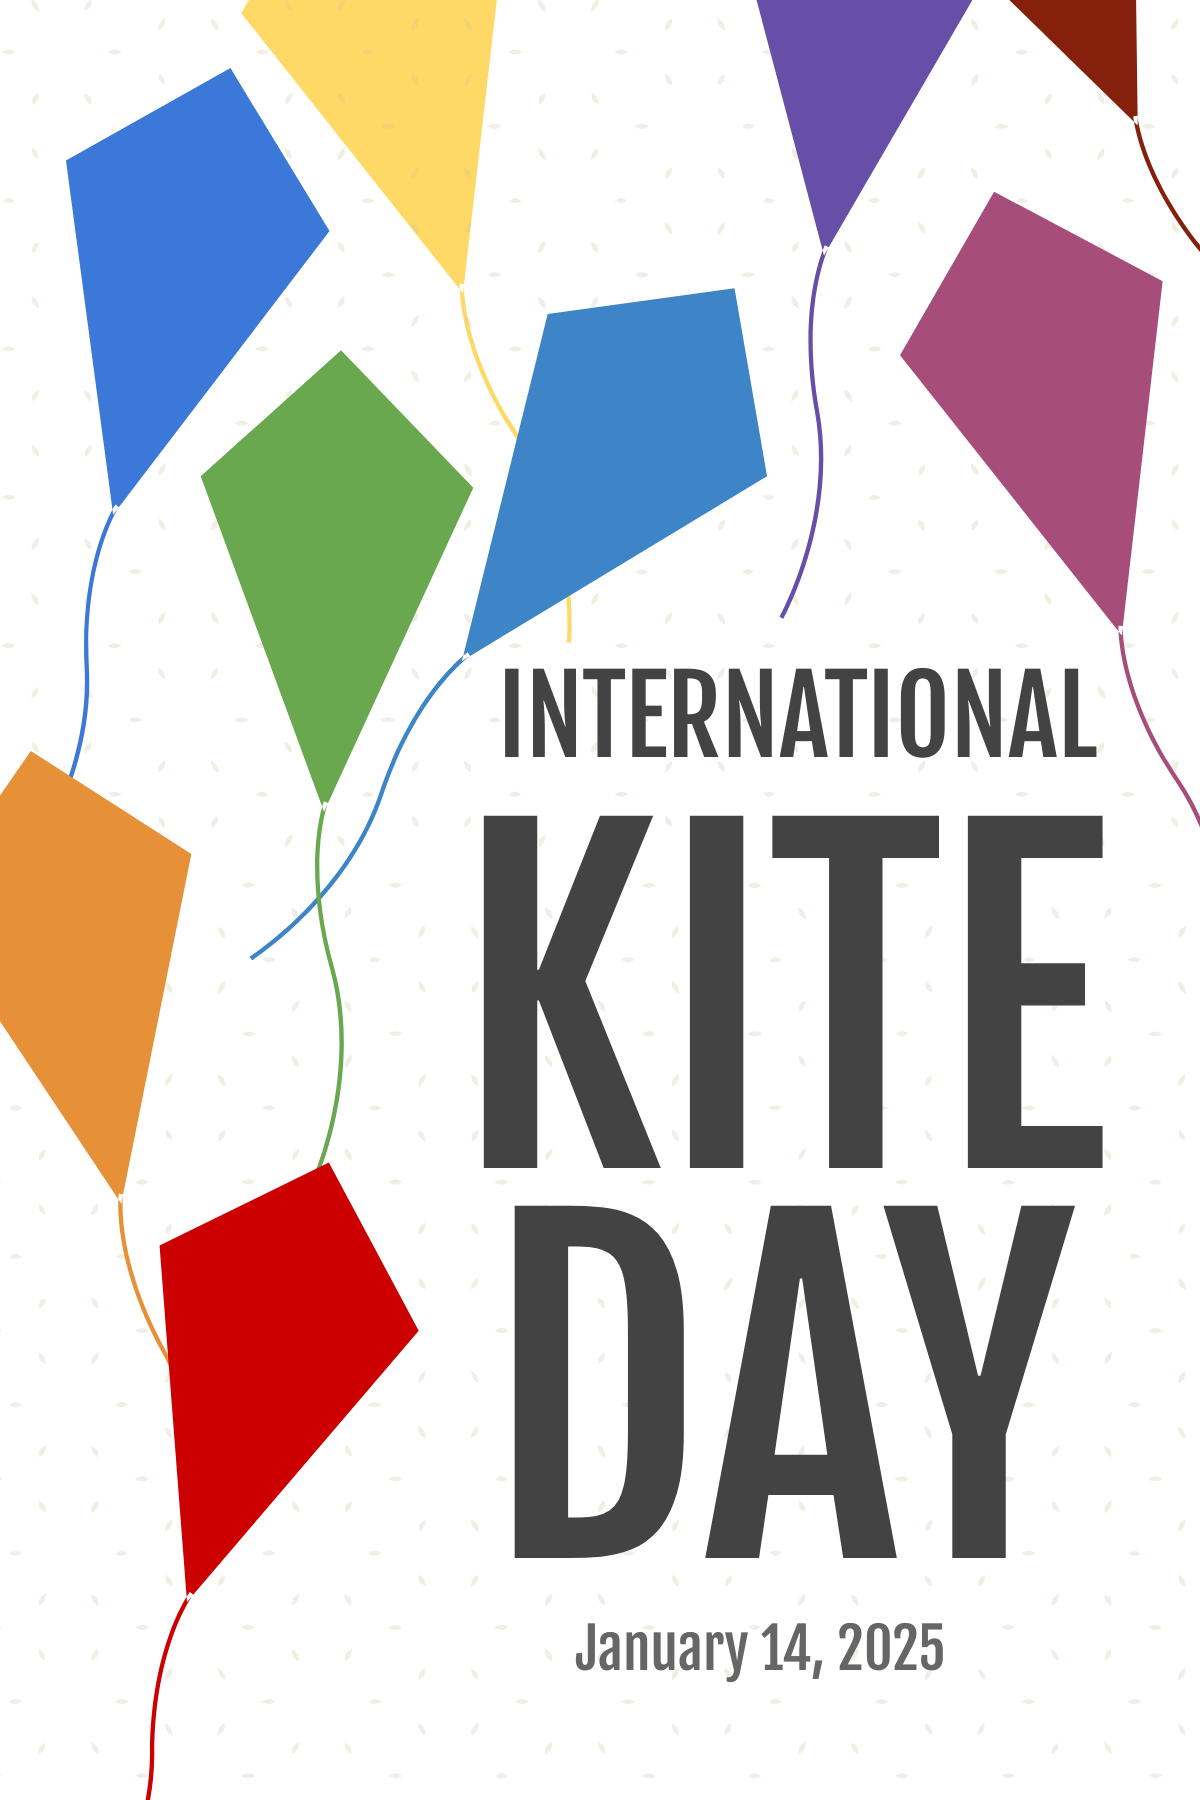 Free International Kites Day Pinterest Pin Template